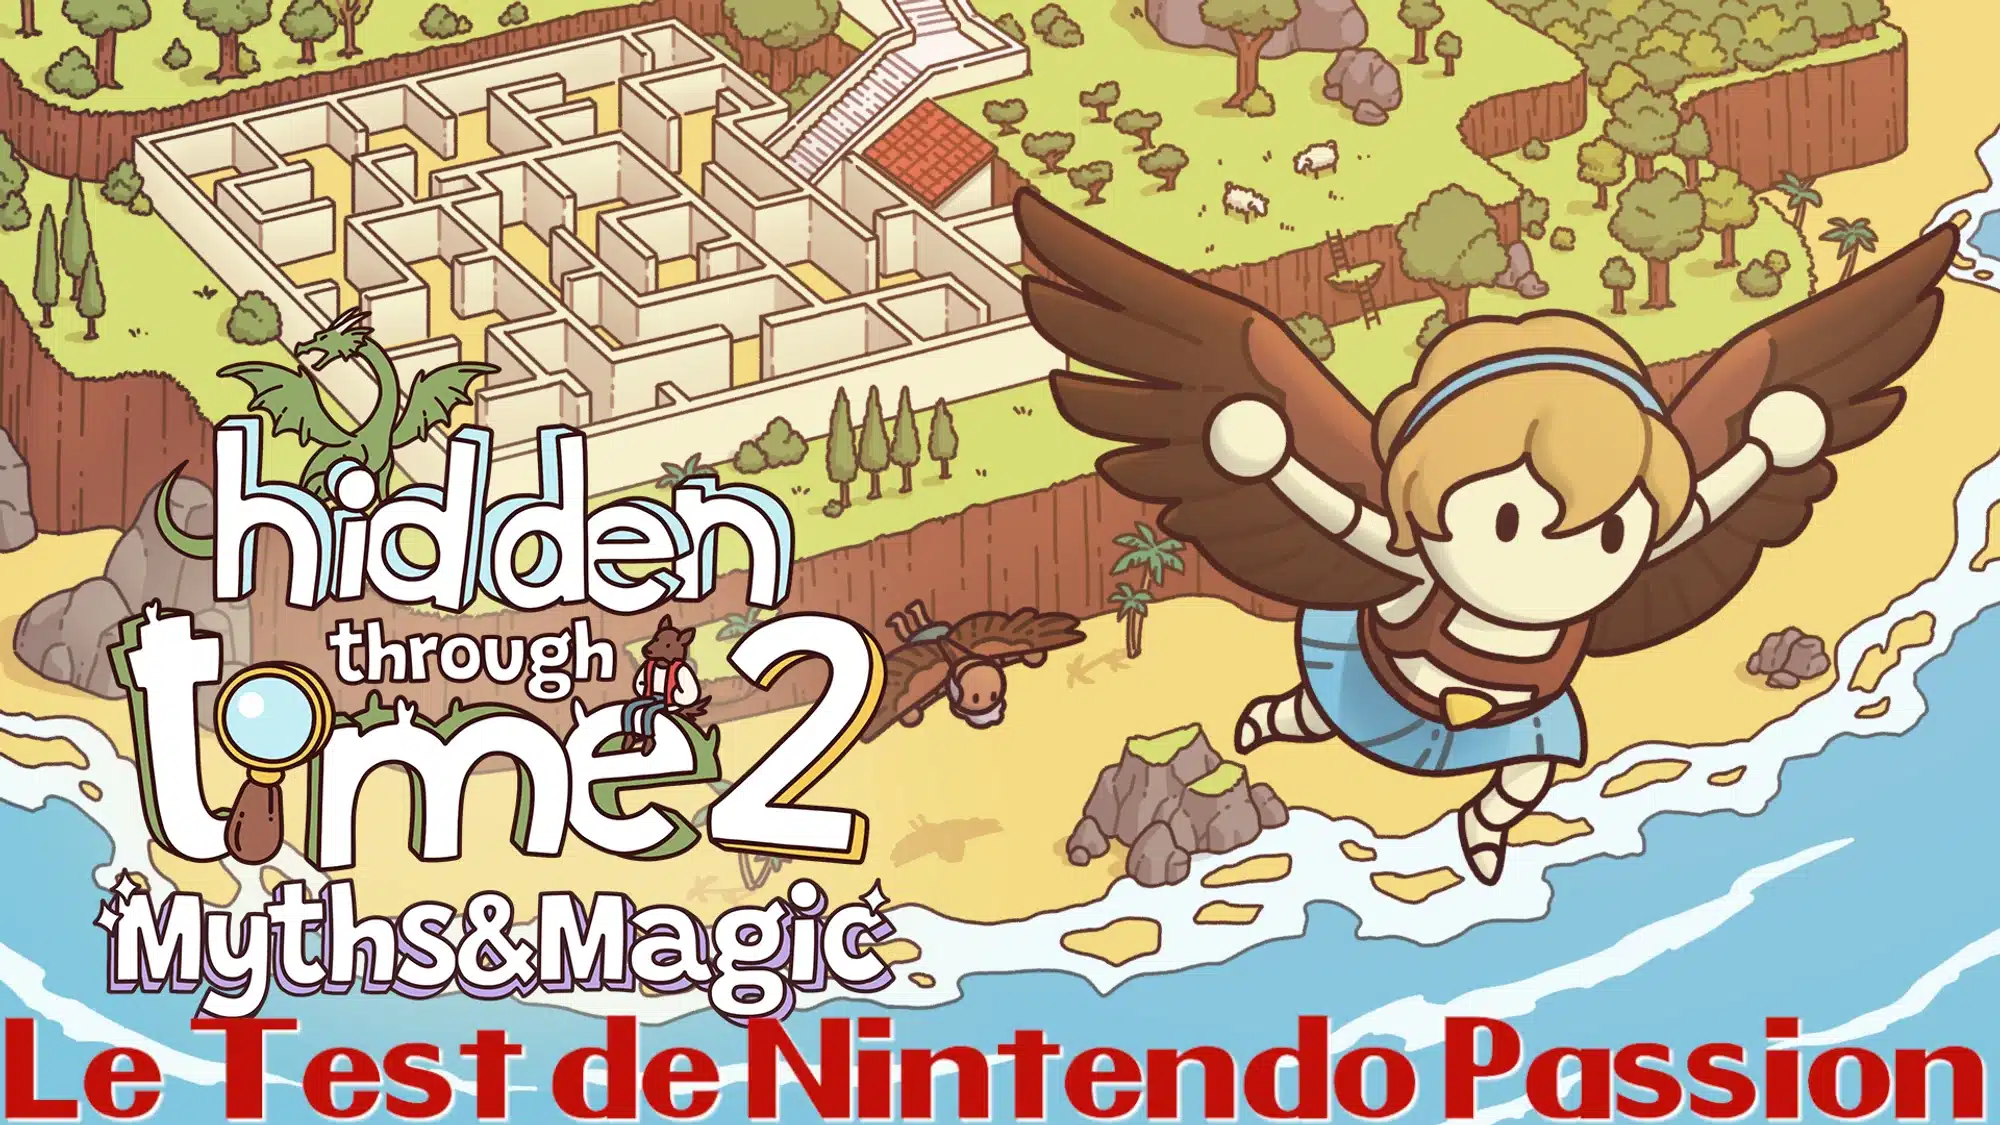 Hidden Through Time 2 Myths & Magic Nintendo Passion